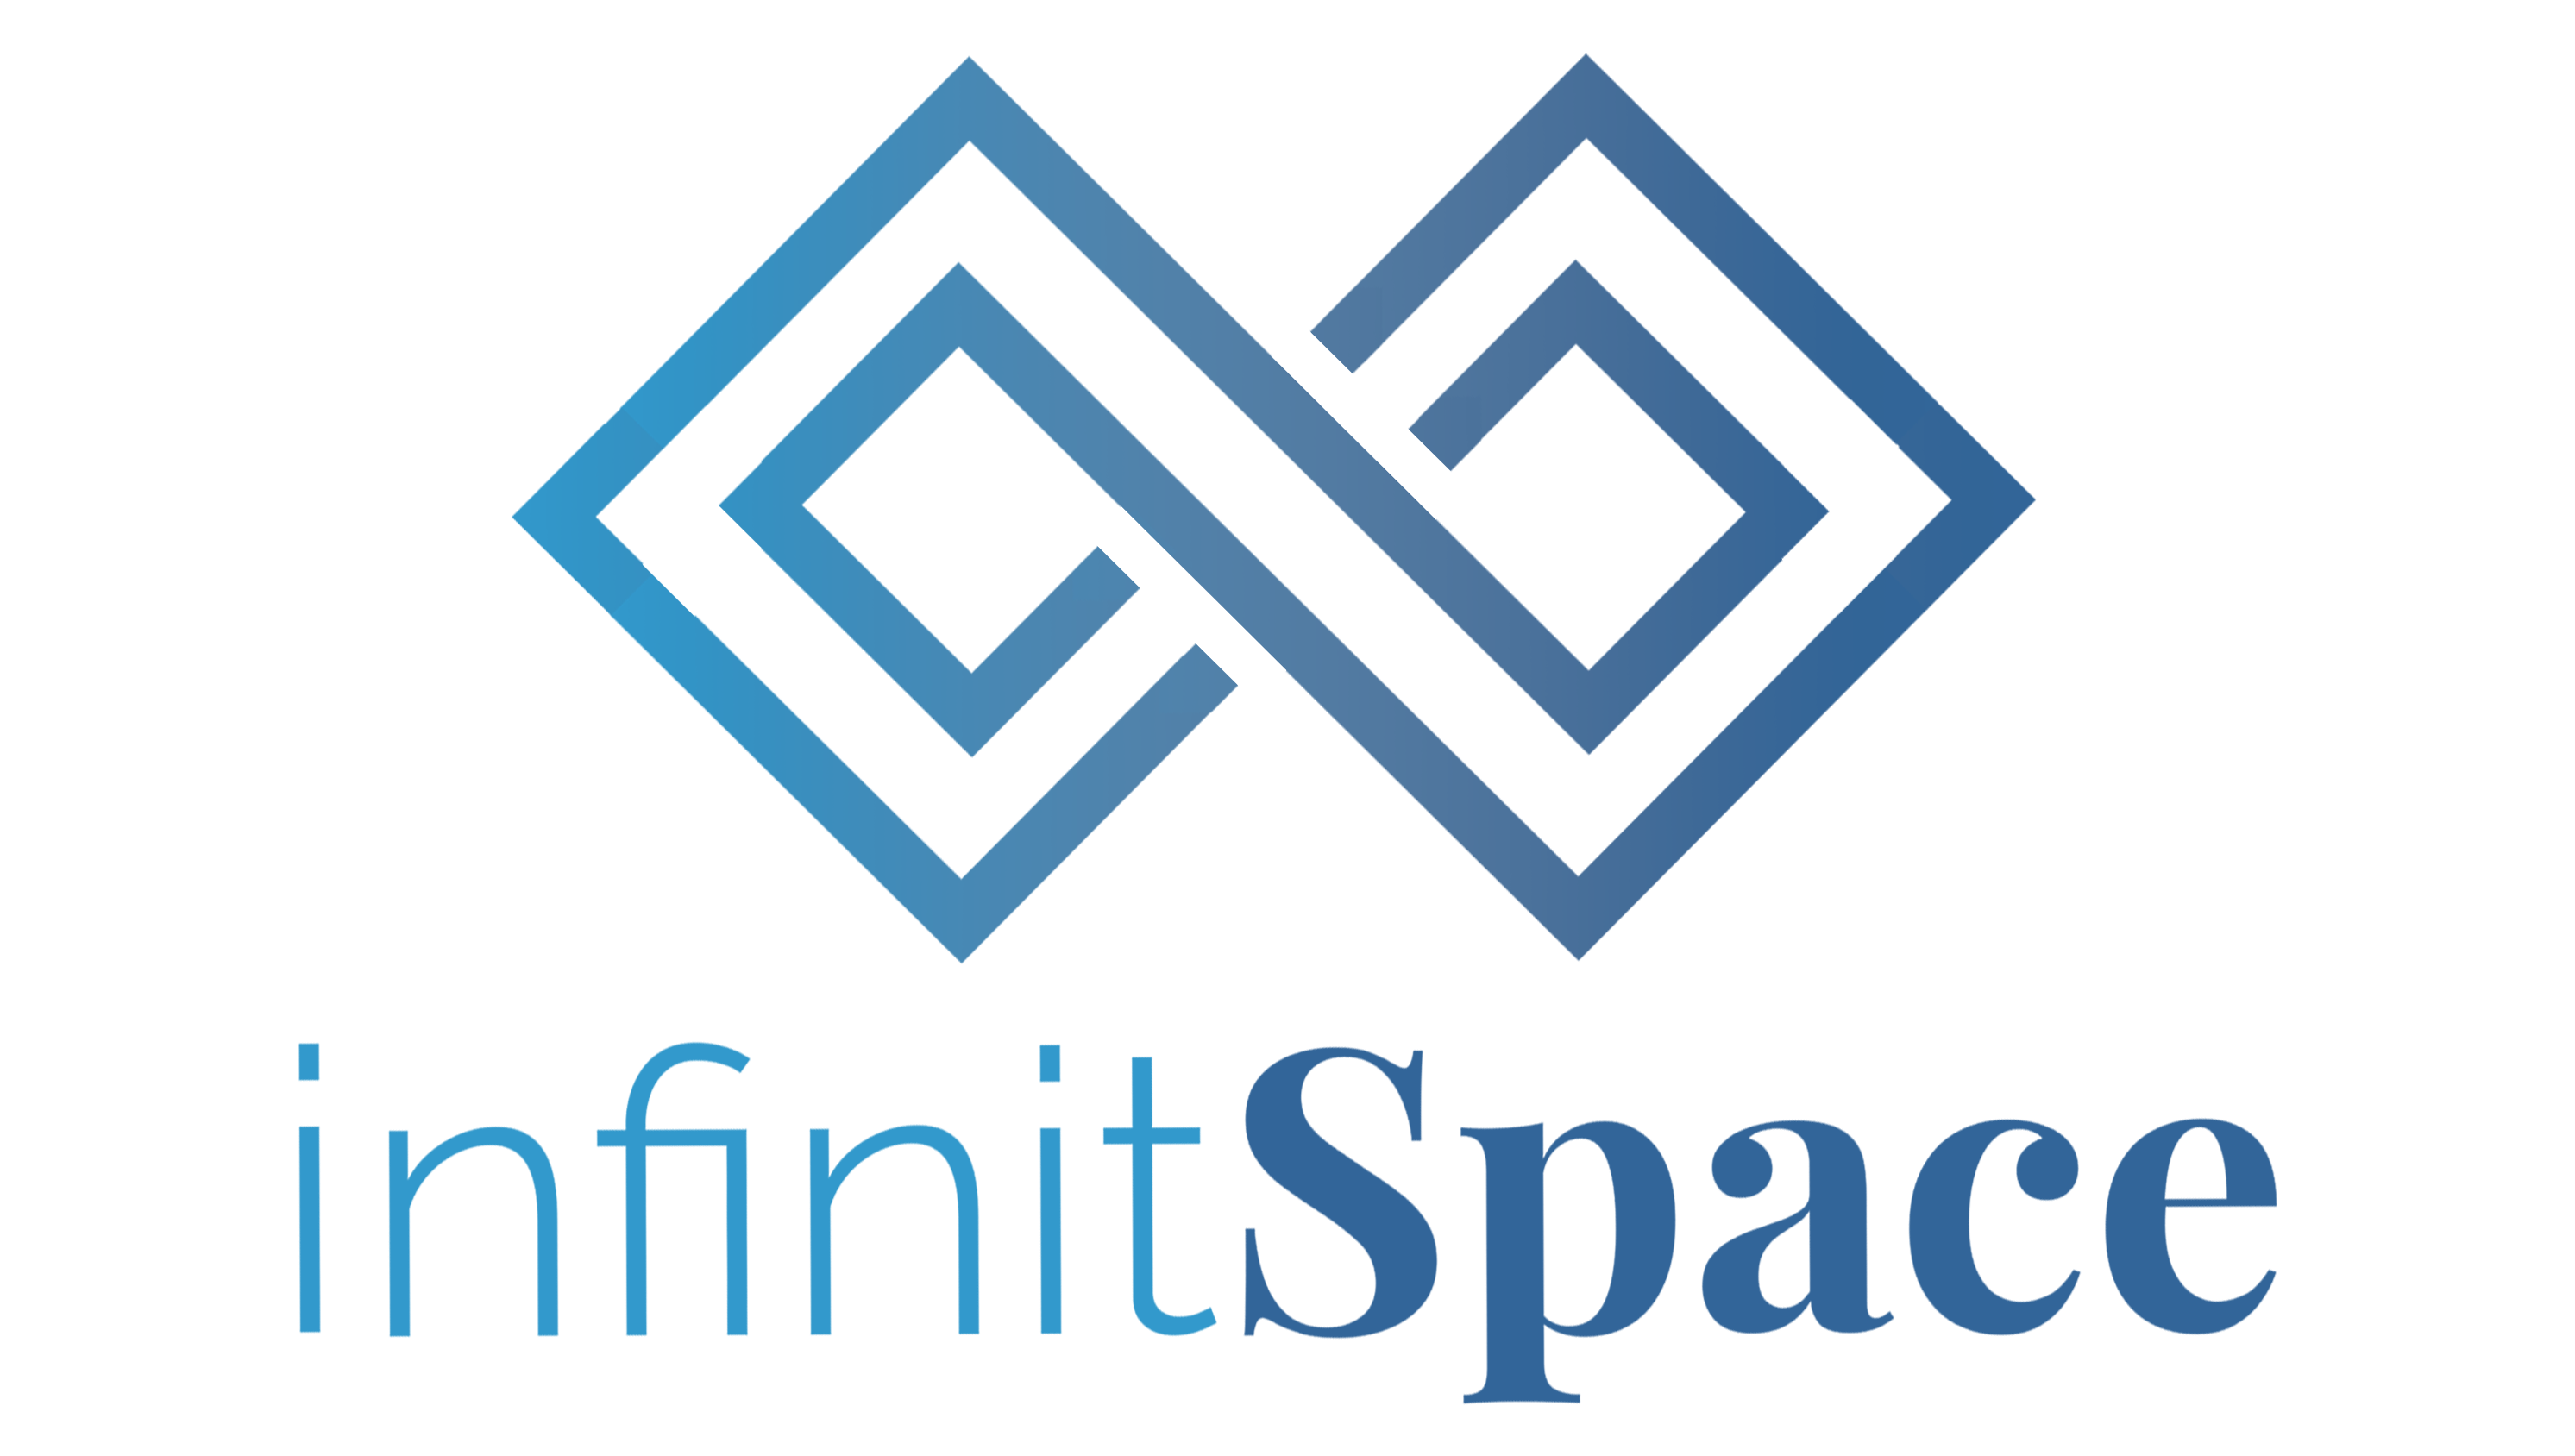 InfinitSpace